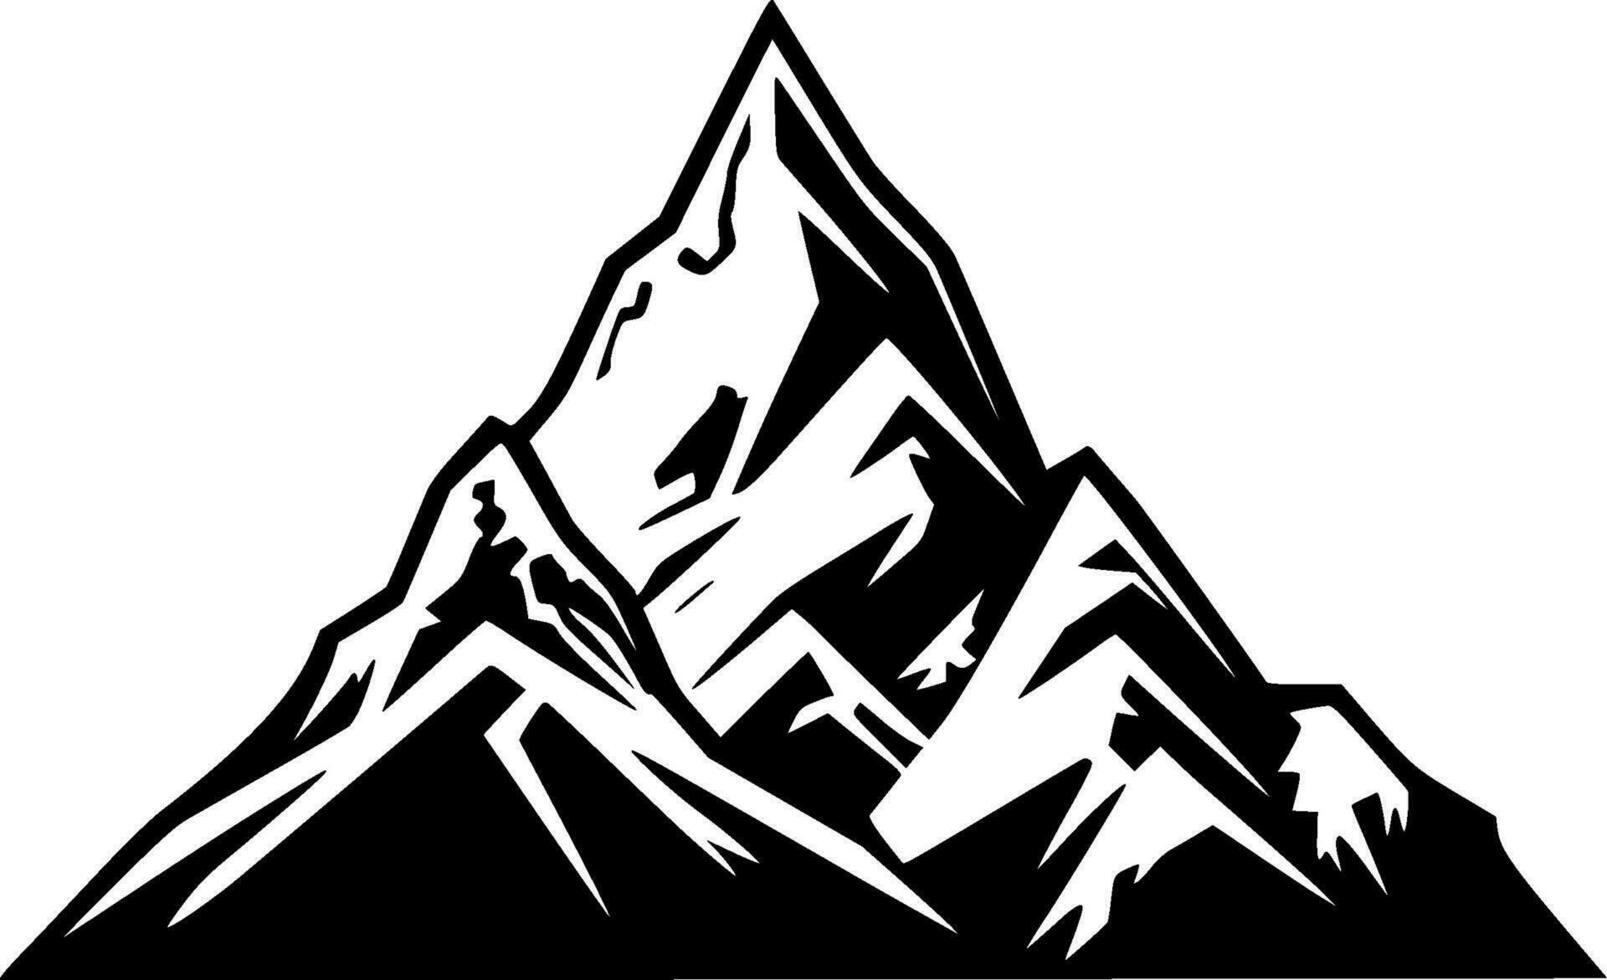 Mountain Range, Black and White Vector illustration